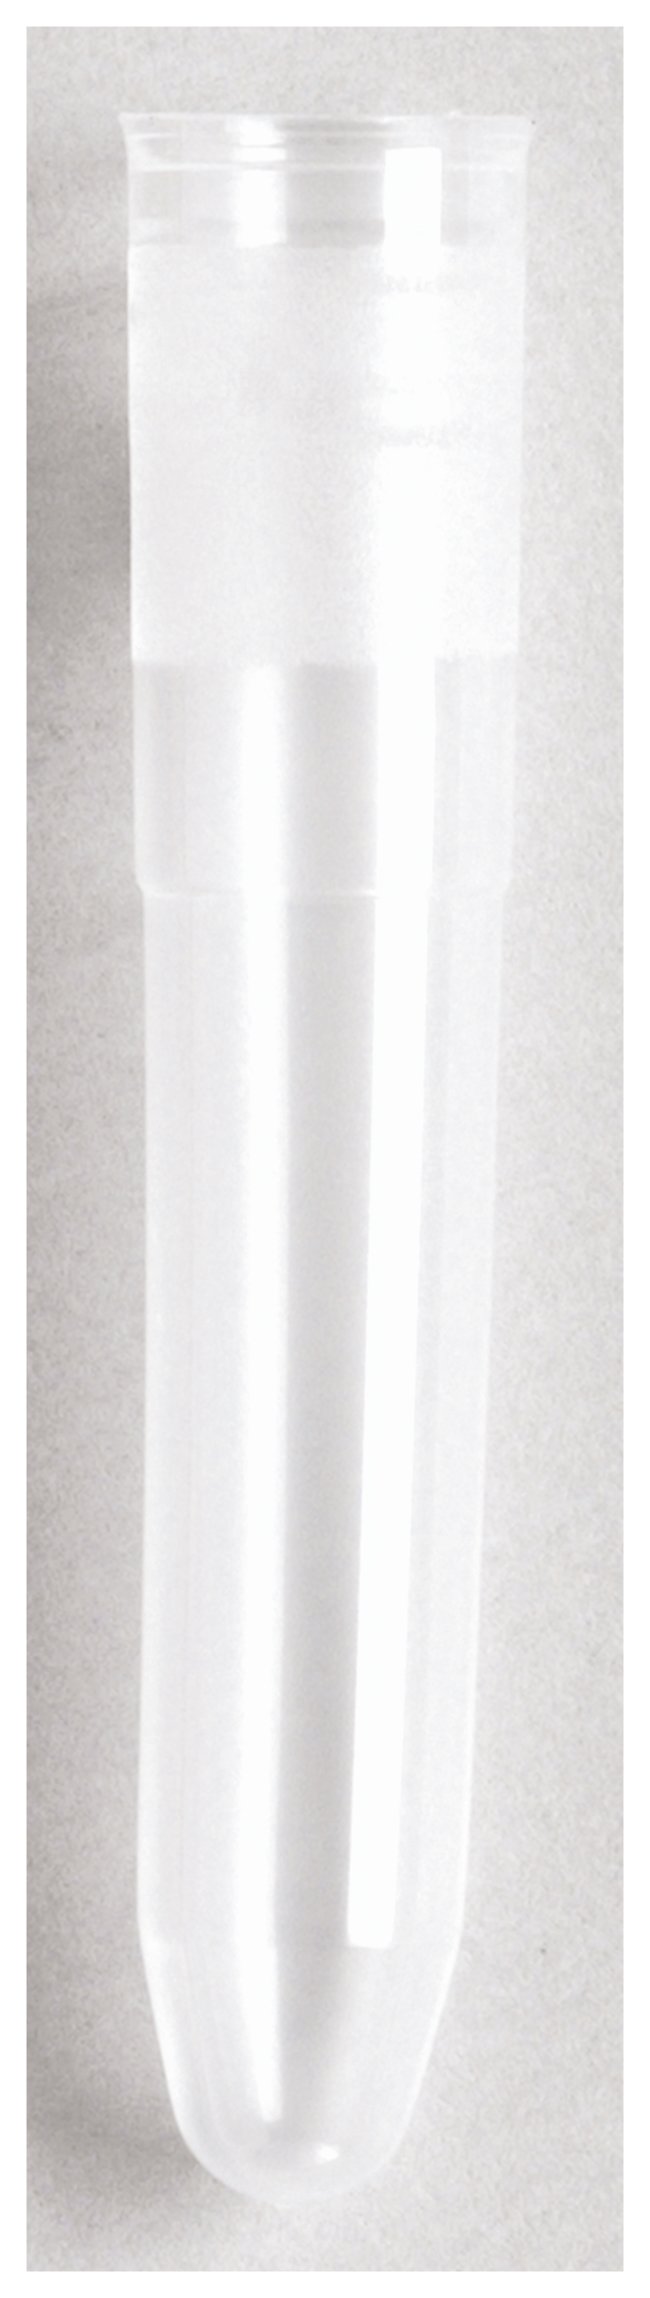 Polypropylene Microtiter Tubes, Plain tubes; Nonsteril